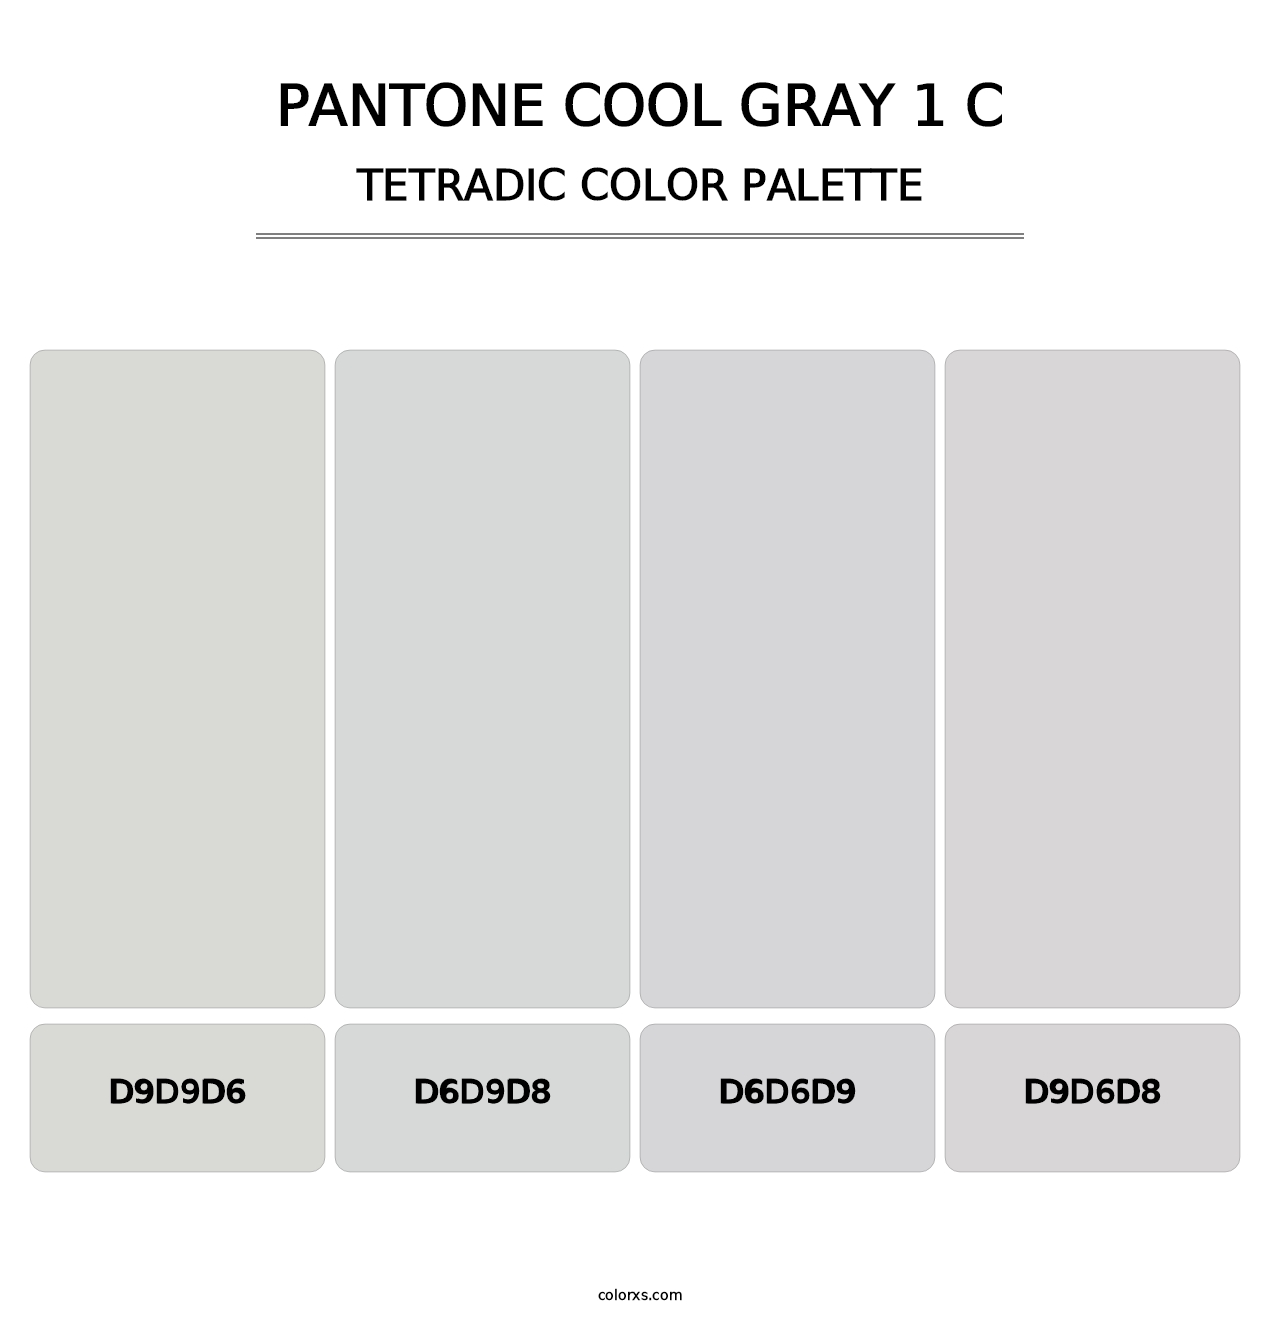 PANTONE Cool Gray 1 C - Tetradic Color Palette